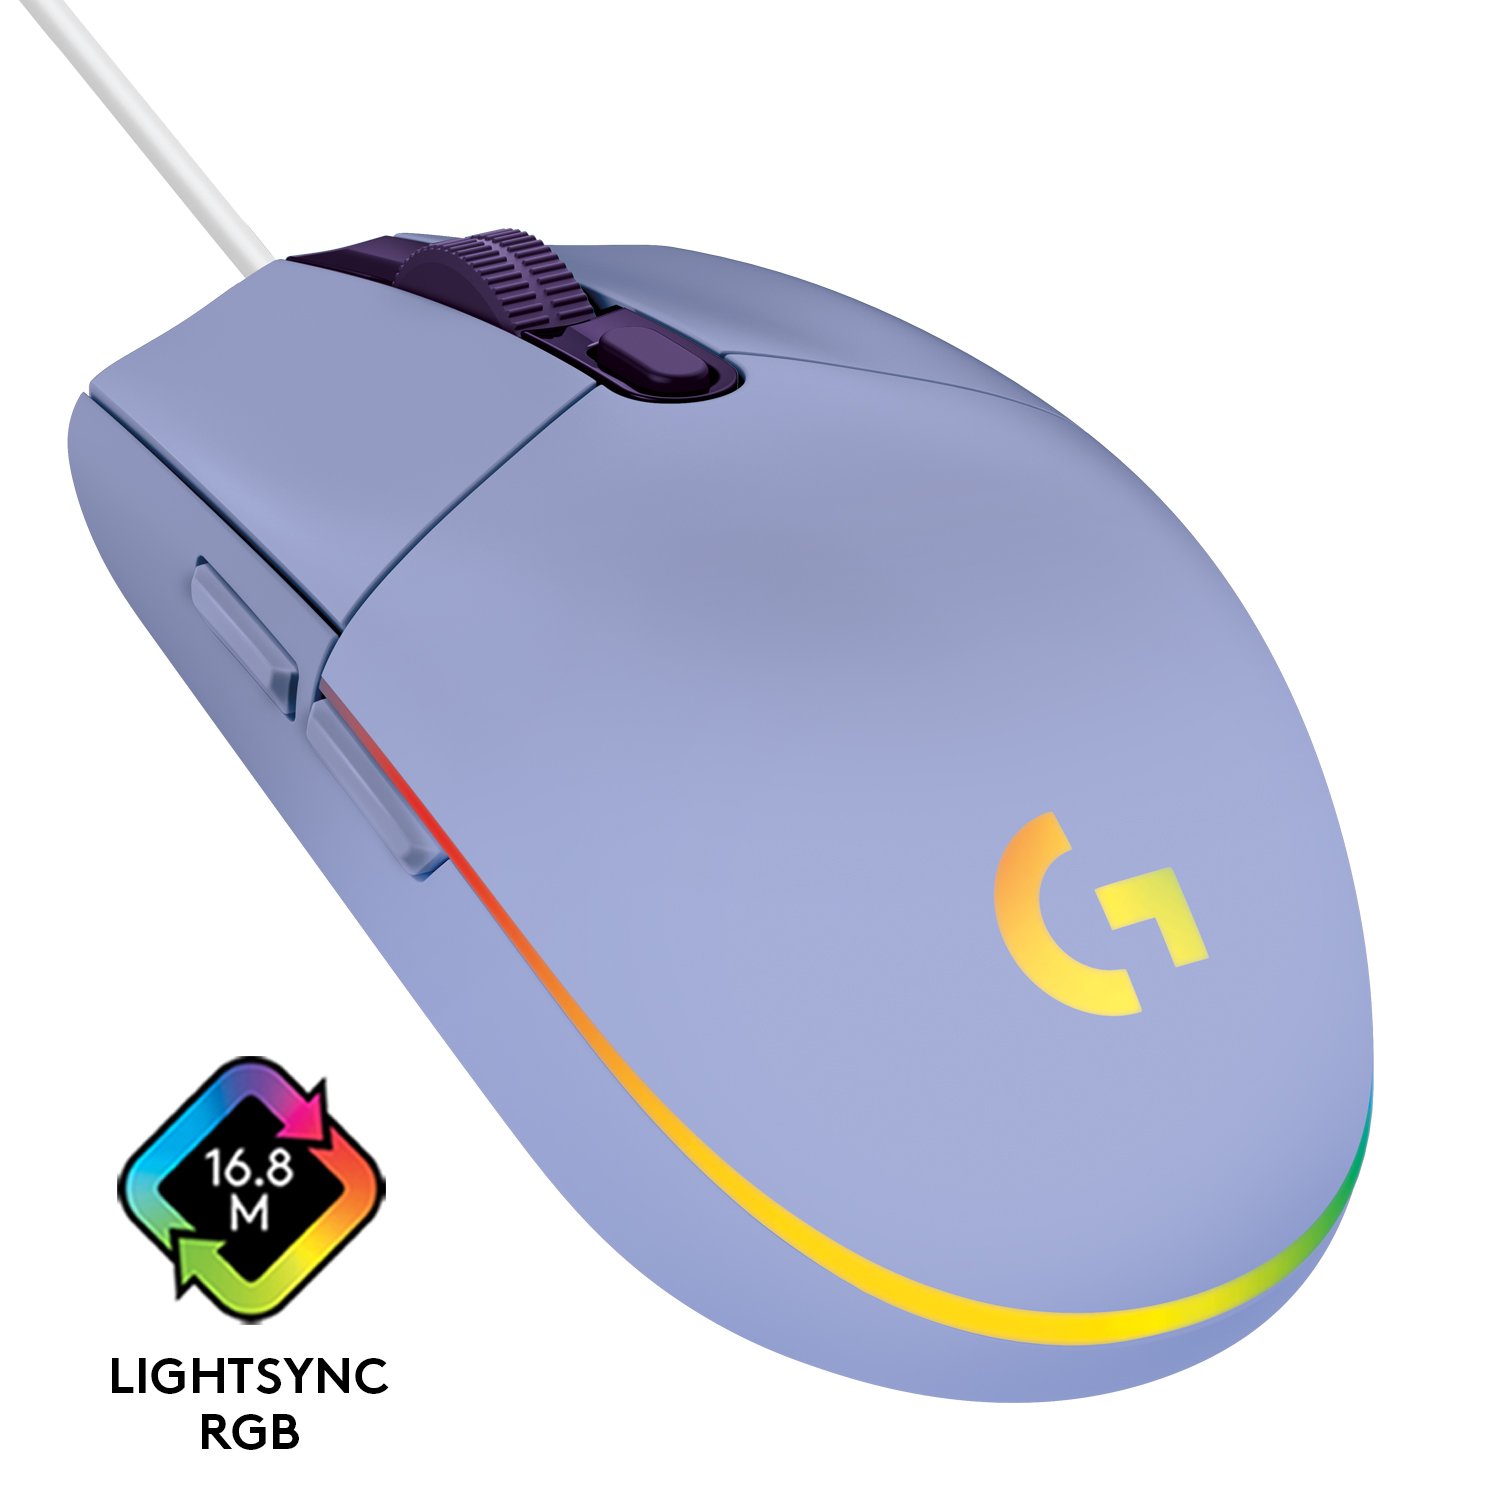 Logitech - G203 Lightsync Gaming Mouse - Lilac